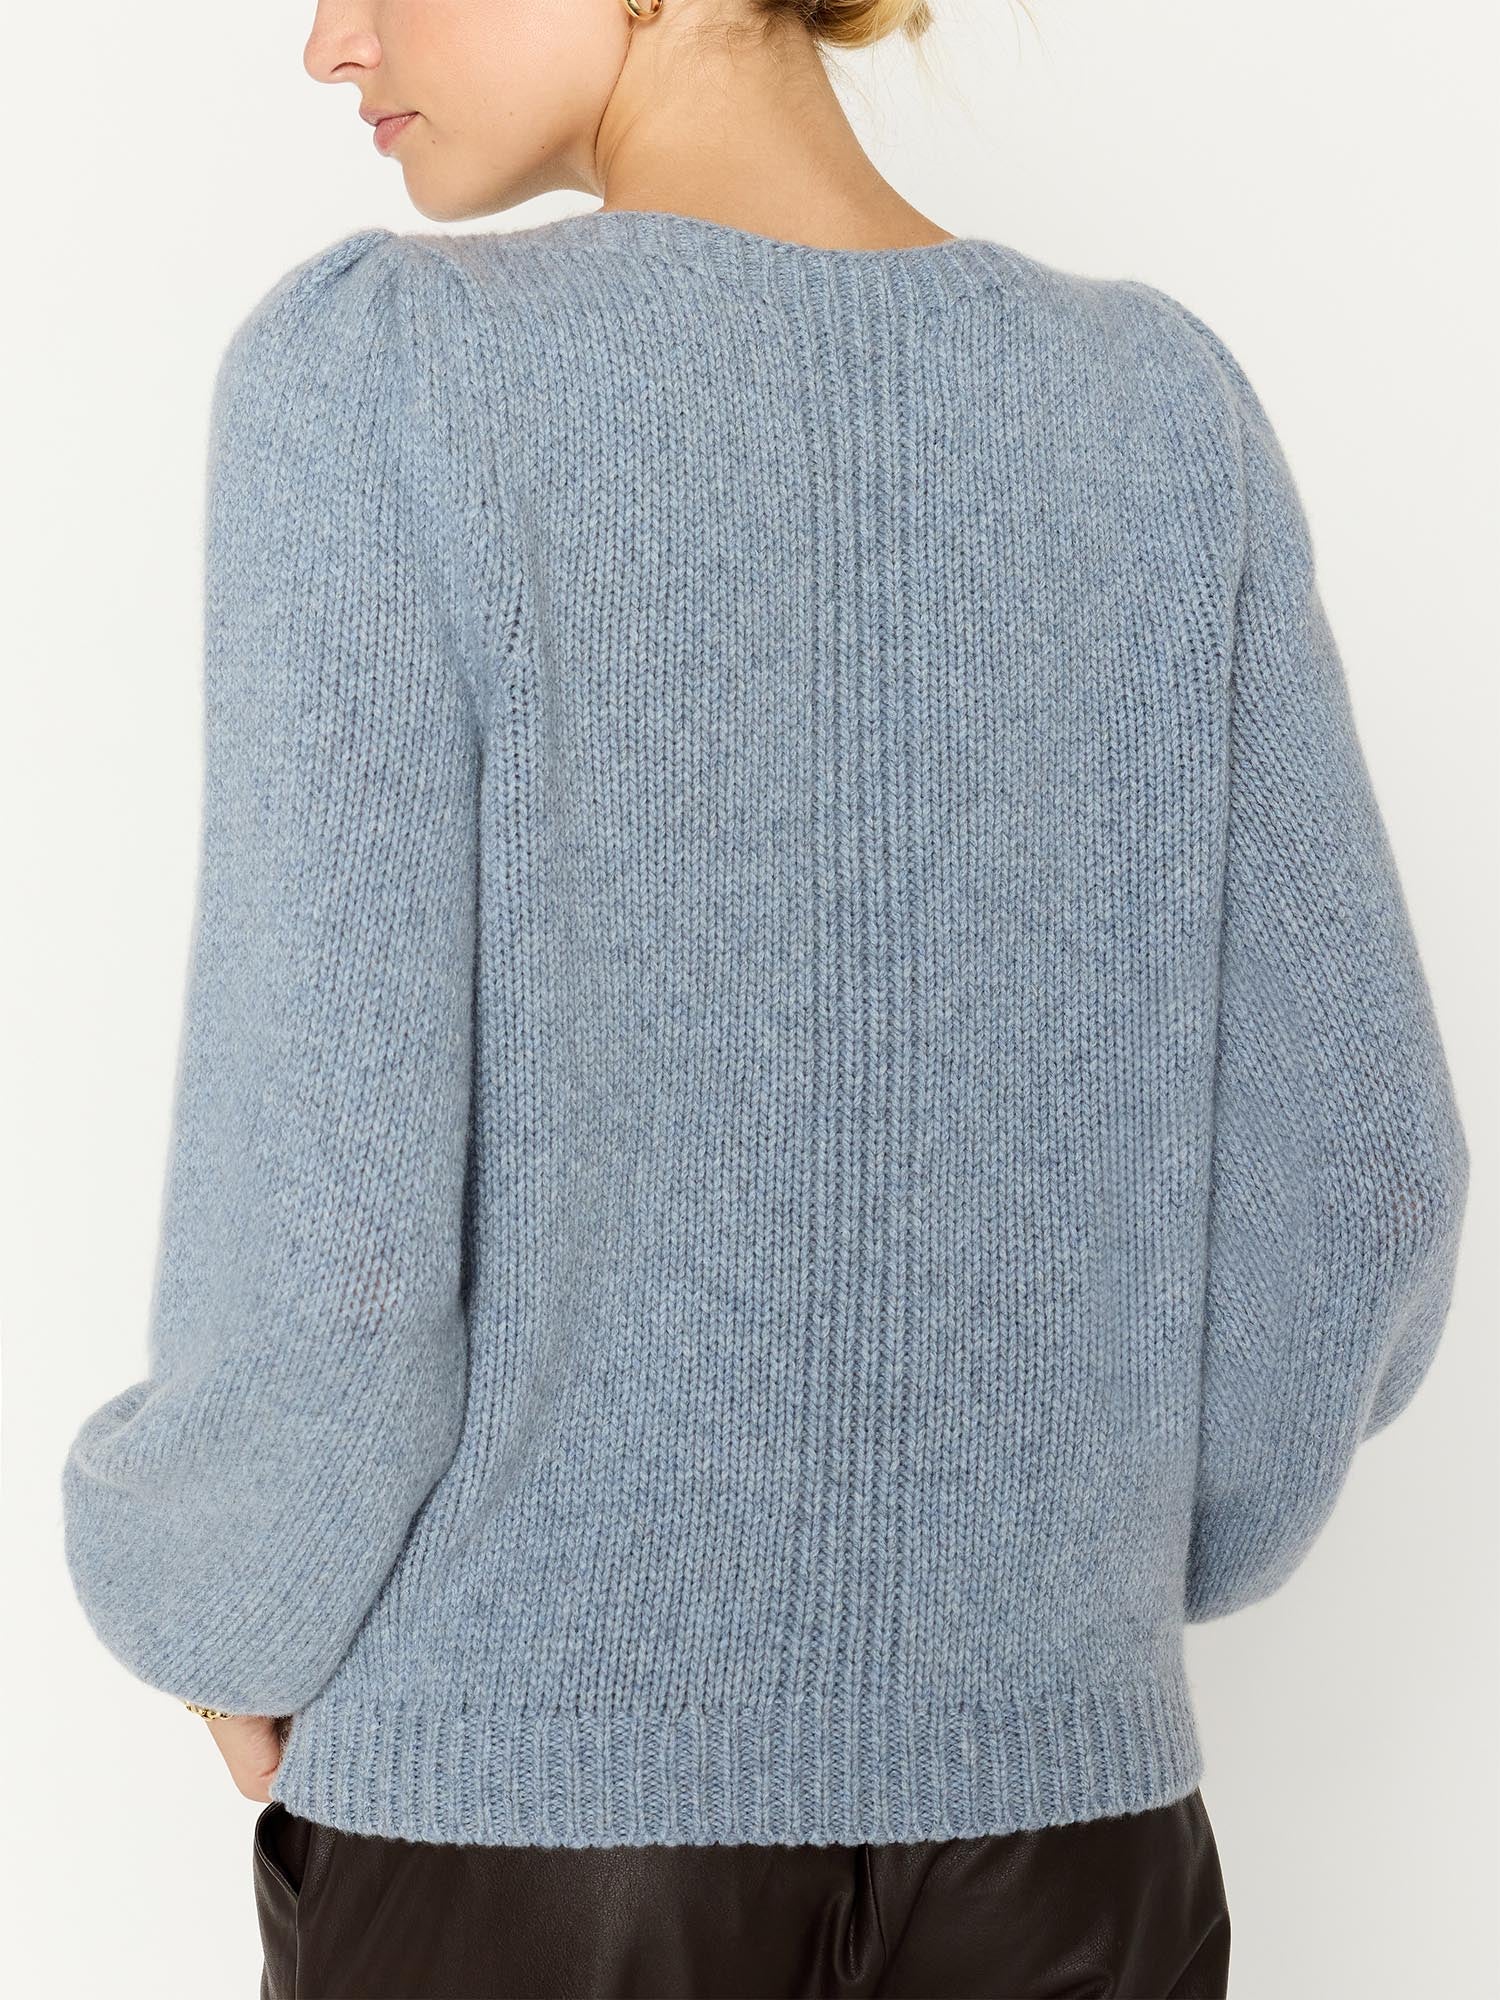 Delphi cashmere boatneck blue sweater back view